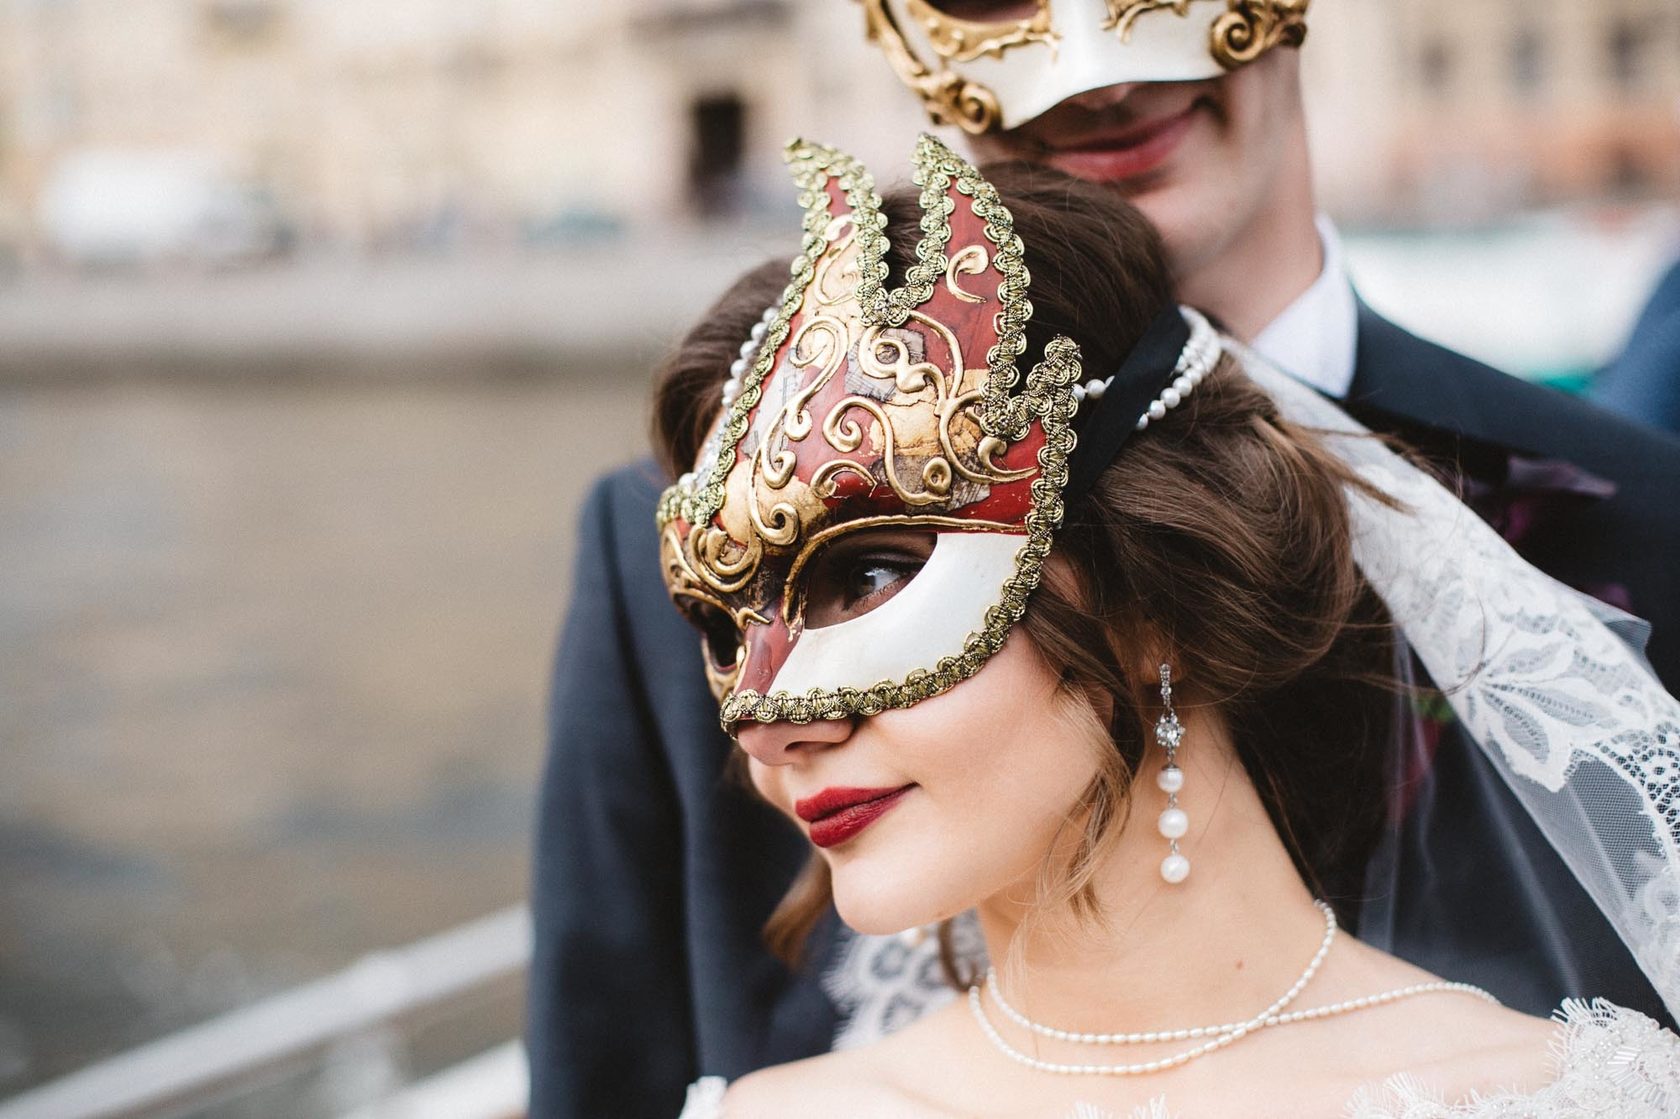 Самая красивая маска. Бал маскарад Венеция. Венецианский карнавал маски. Венецианский карнавал невеста маска. Венецианский карнавал Жюль Демерссман.